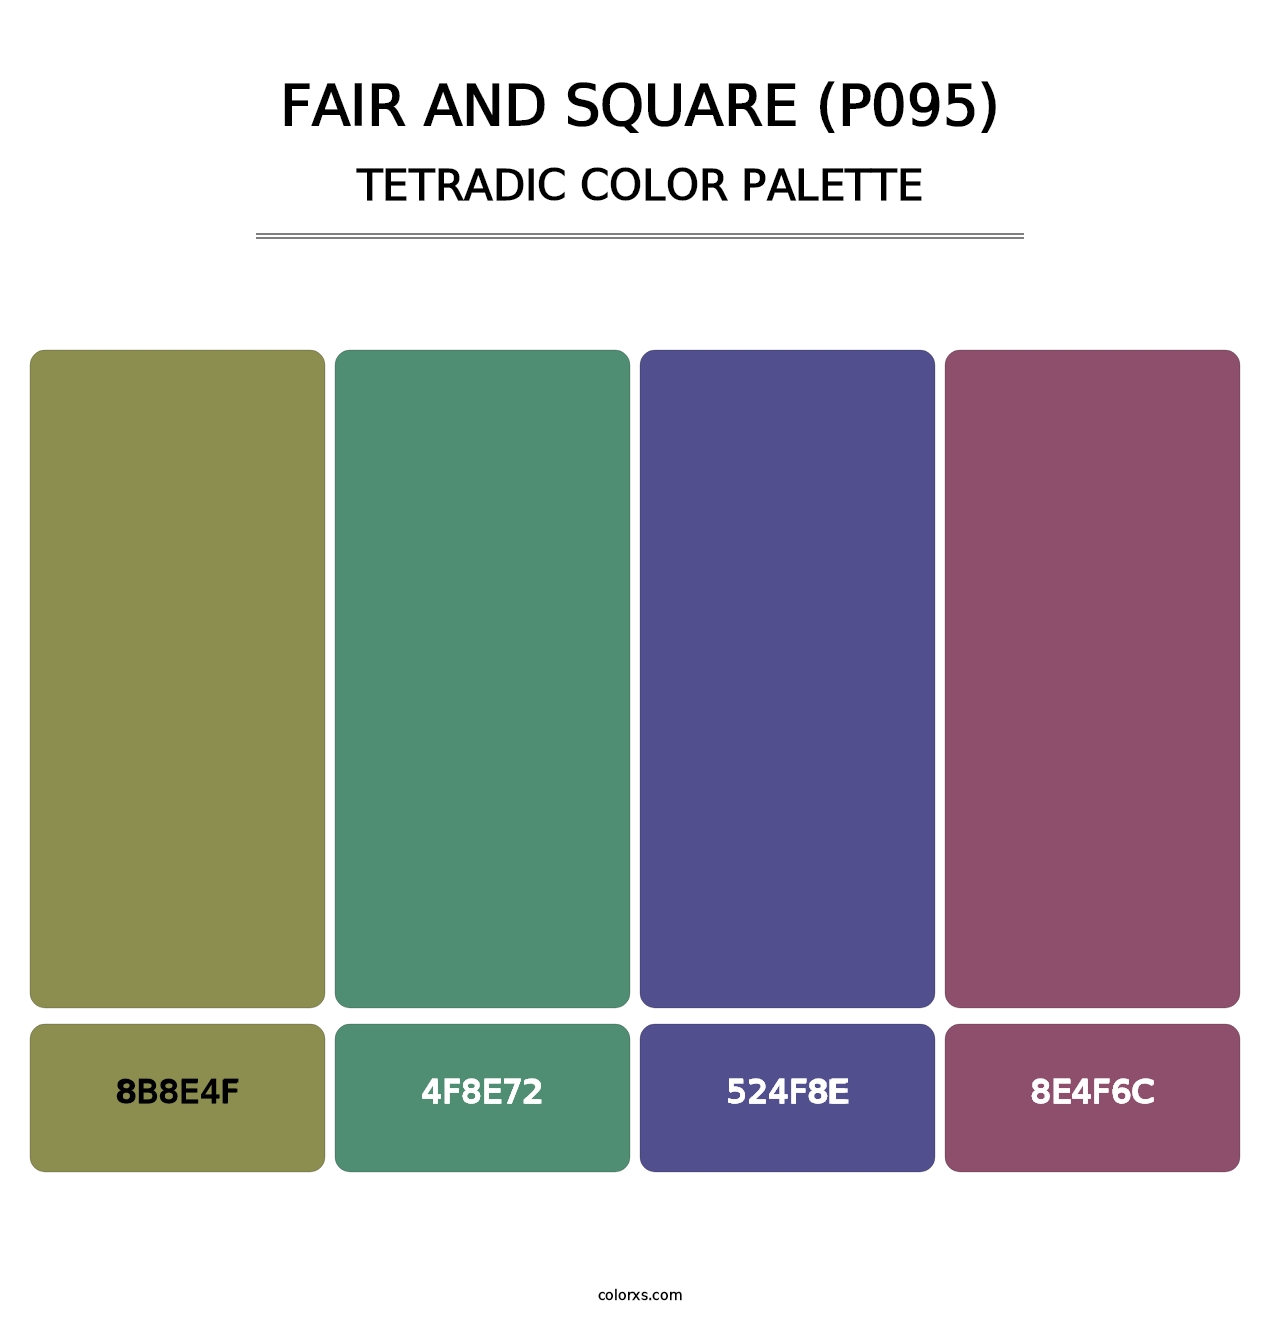 Fair and Square (P095) - Tetradic Color Palette